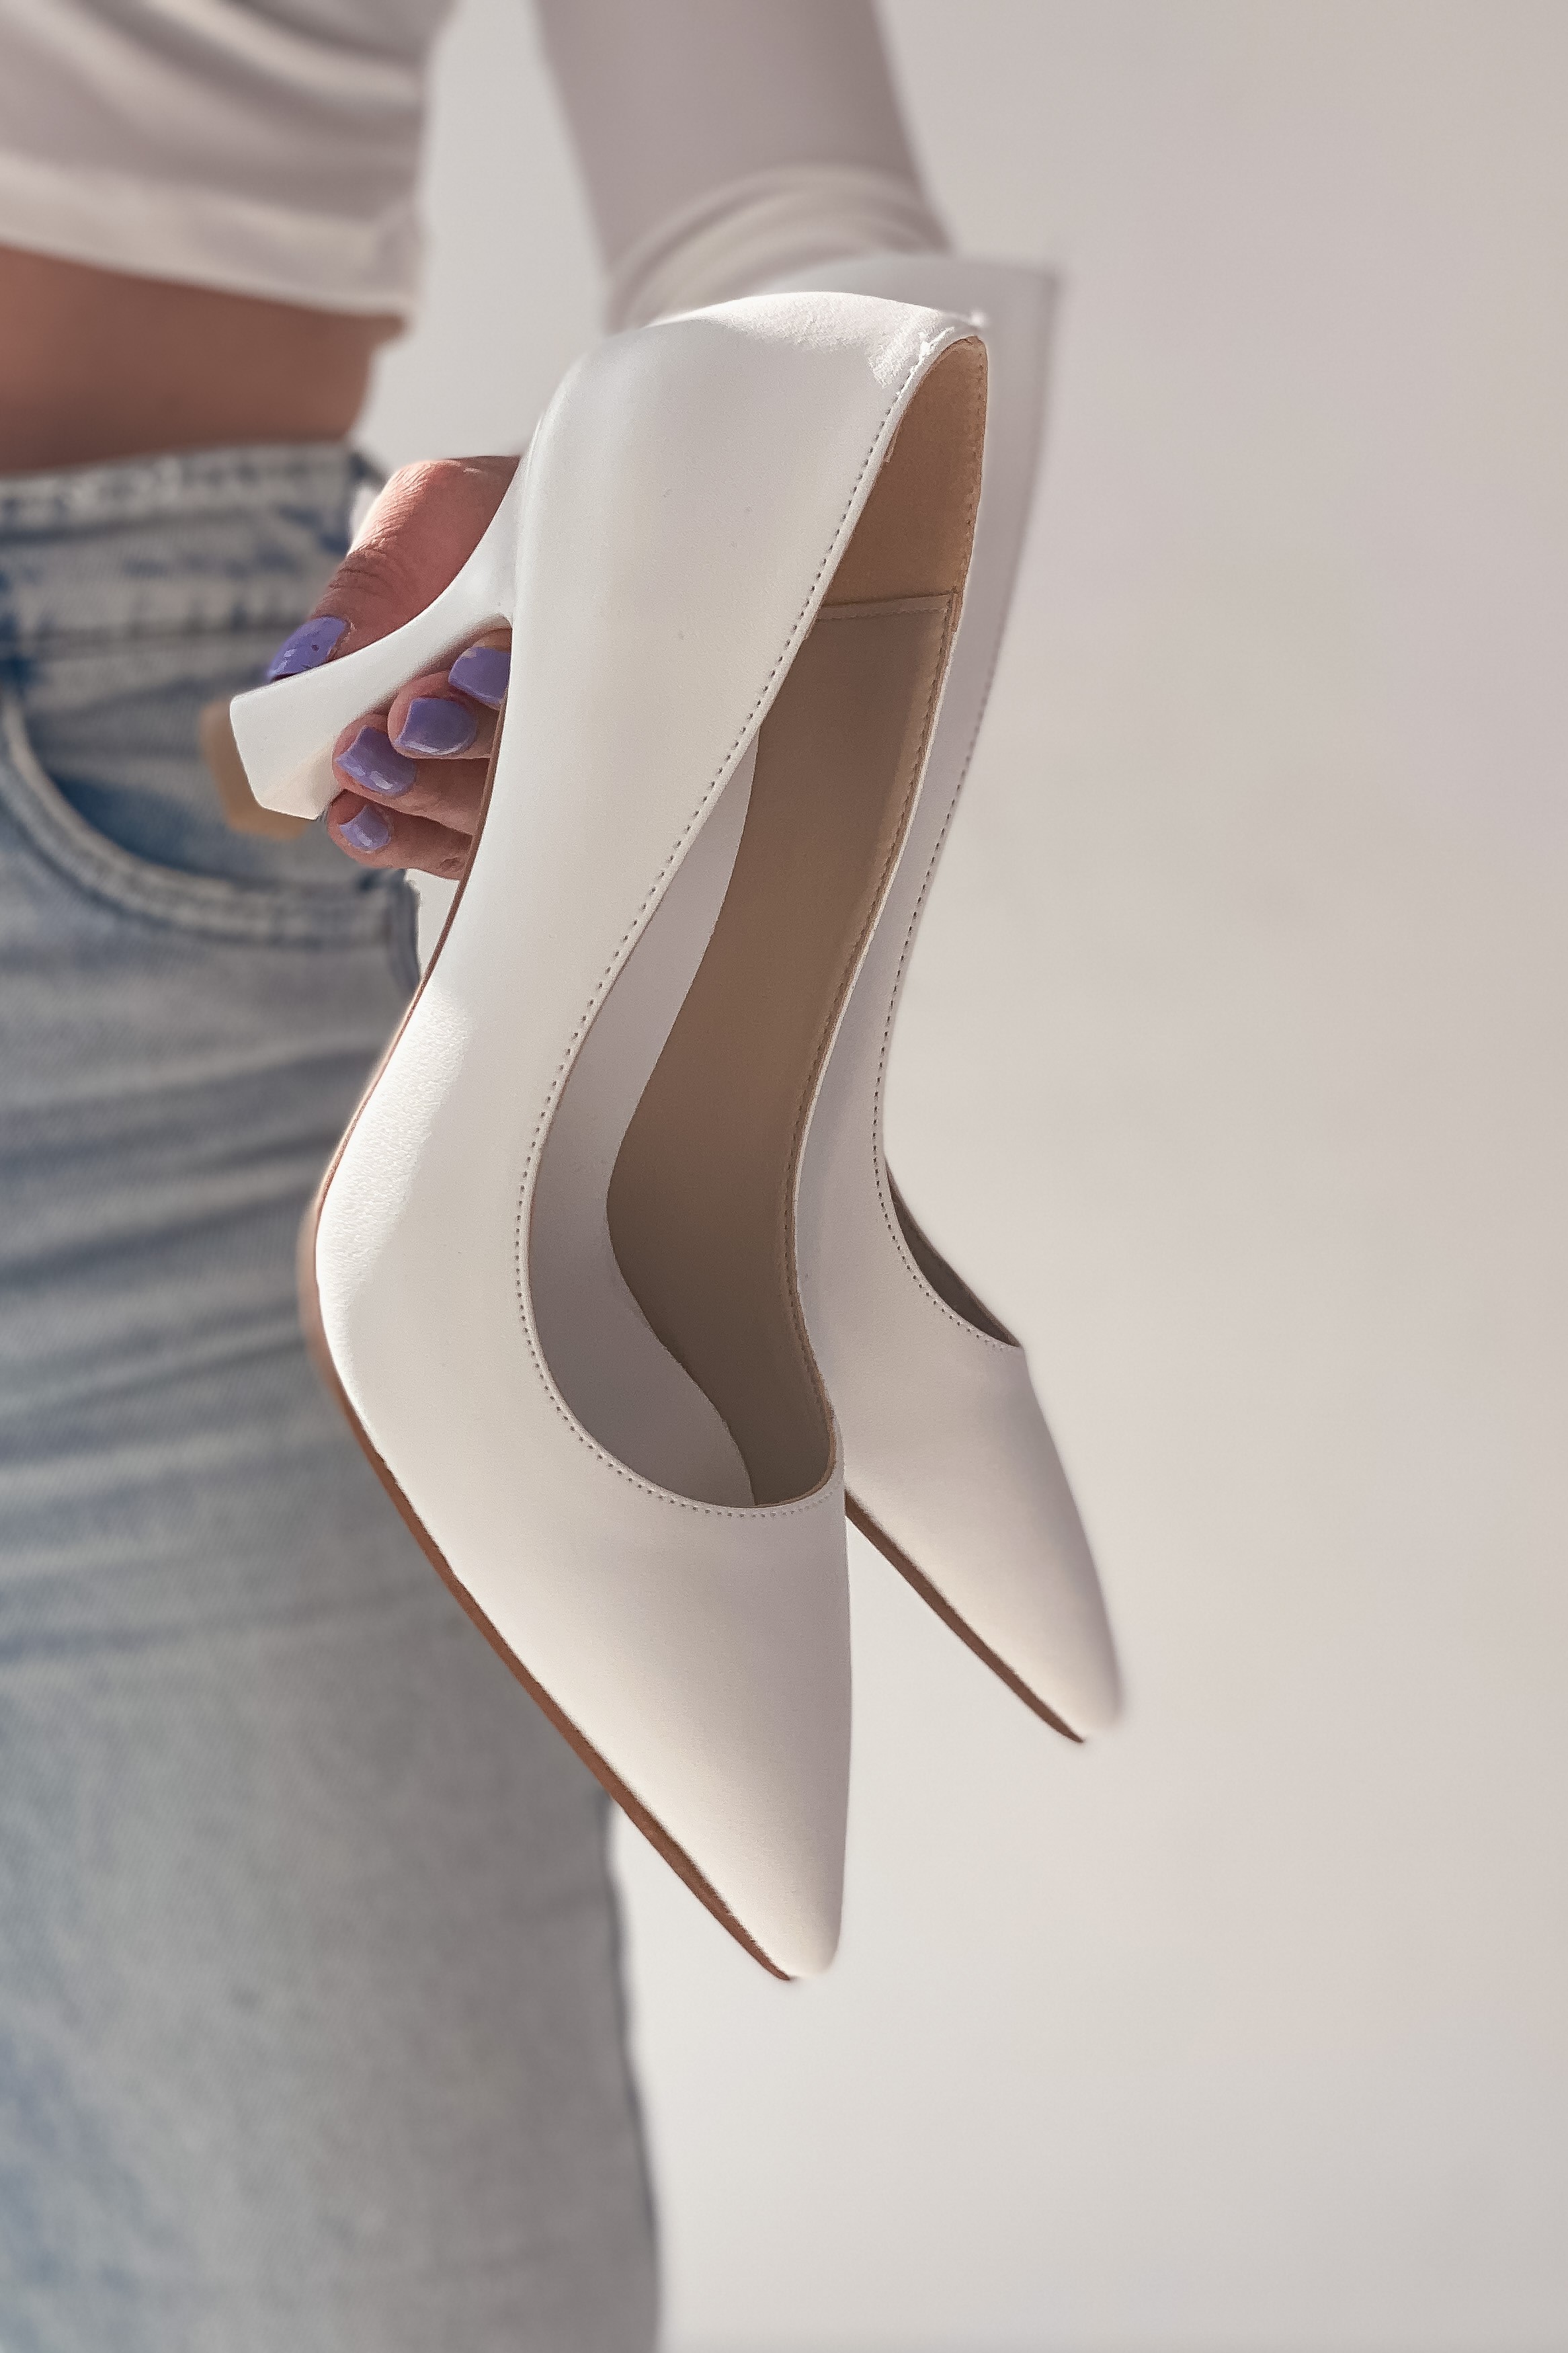 Pandone Mat Deri Yüksek Topuklu Stiletto Beyaz